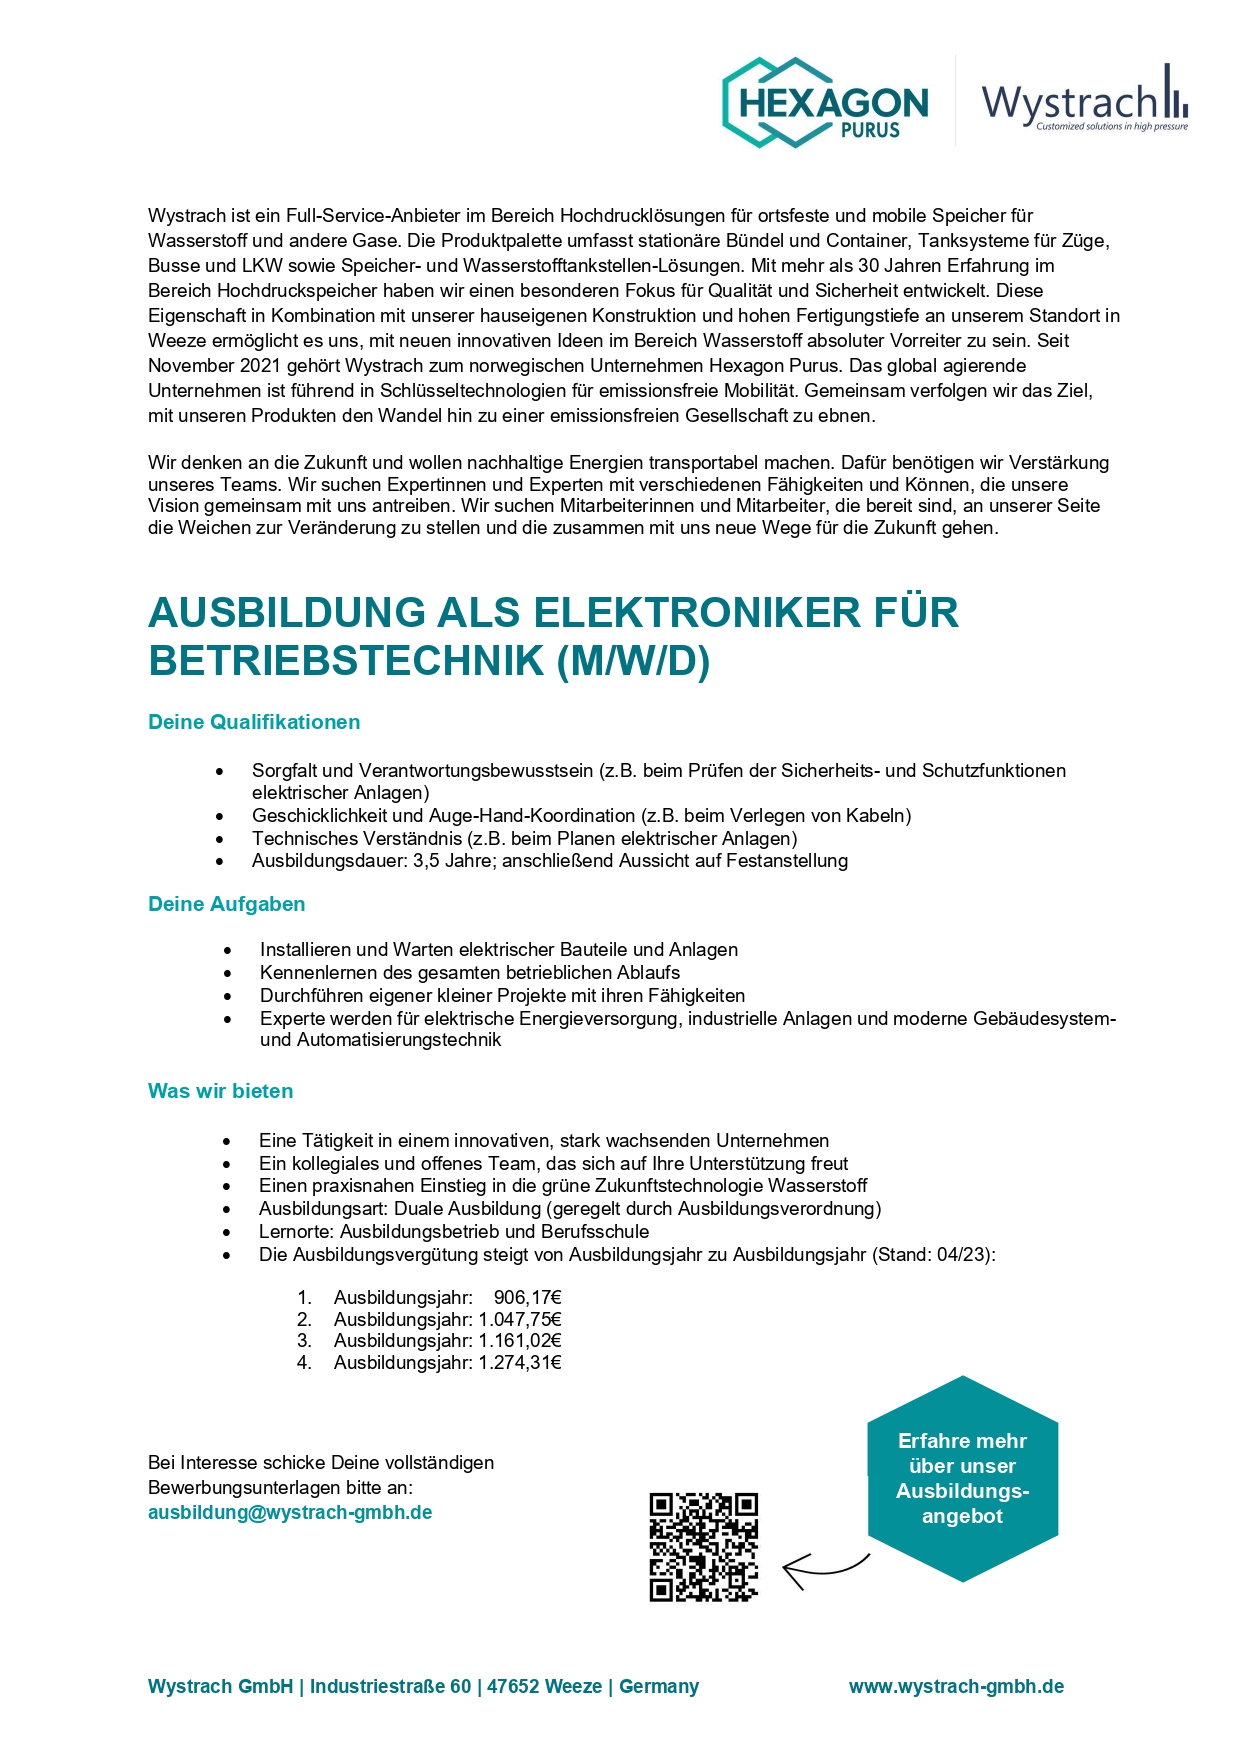 Elektroniker für Betriebstechnik (m/w/d)